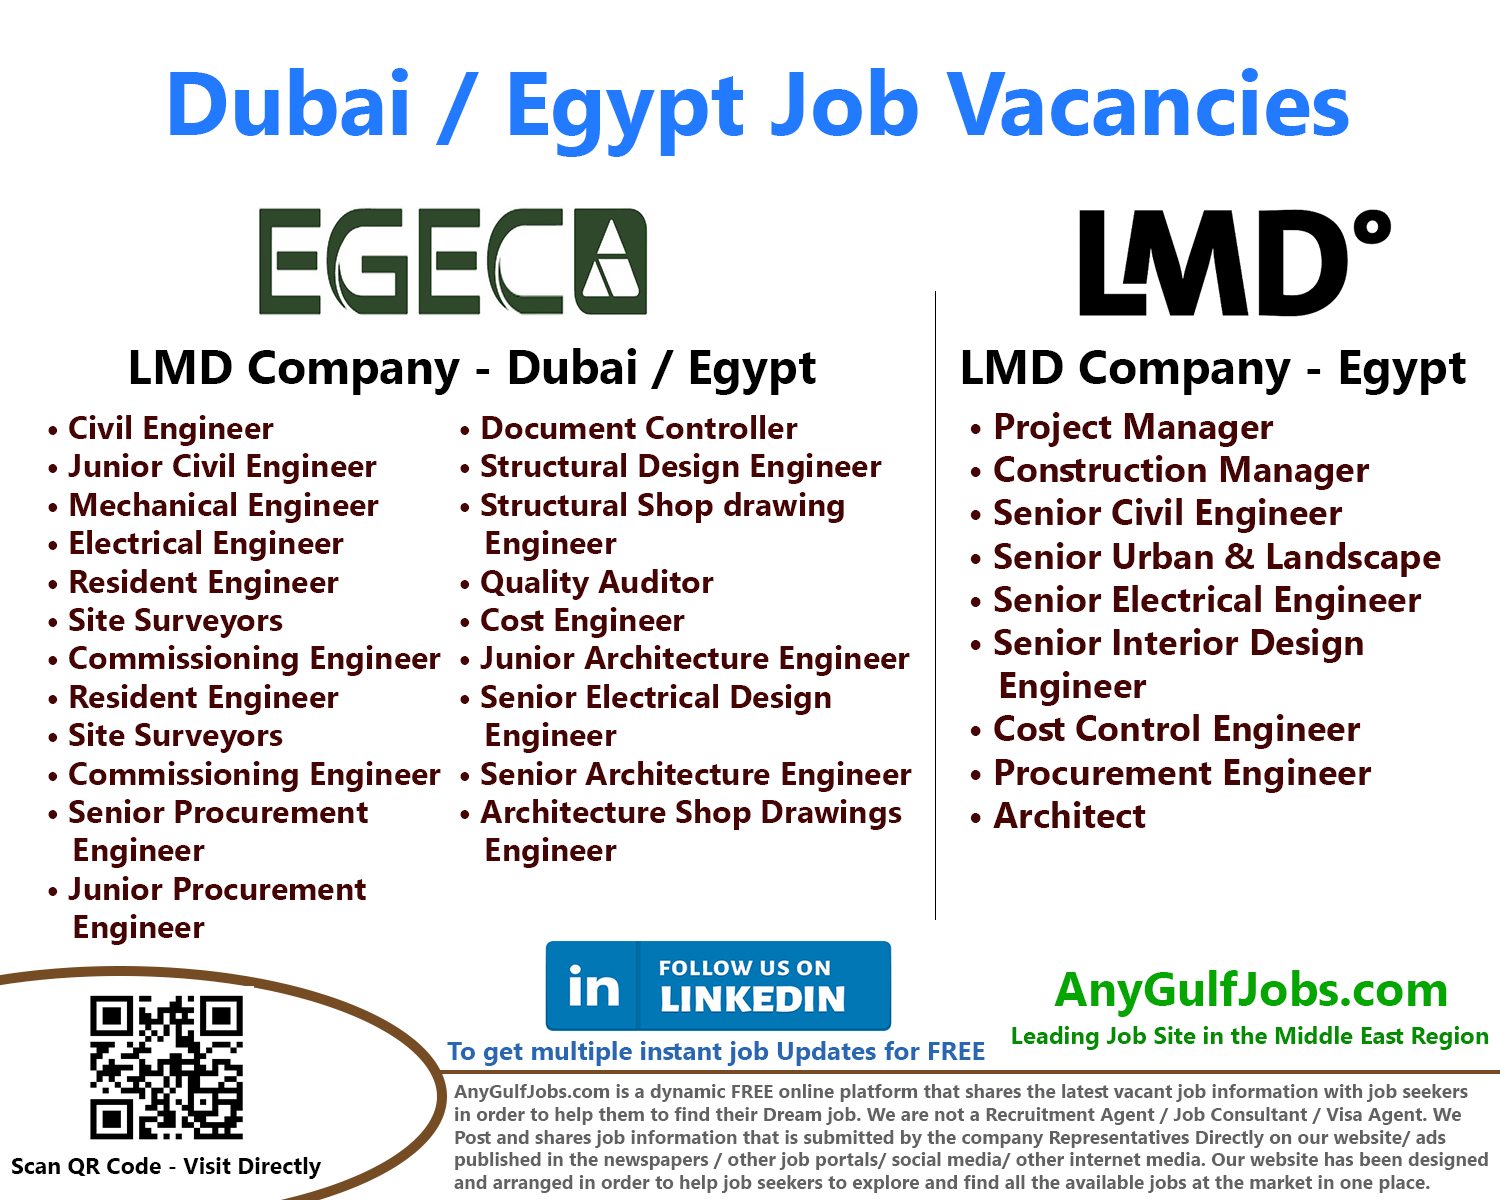 LMD Job Vacancies in Cairo, Egypt